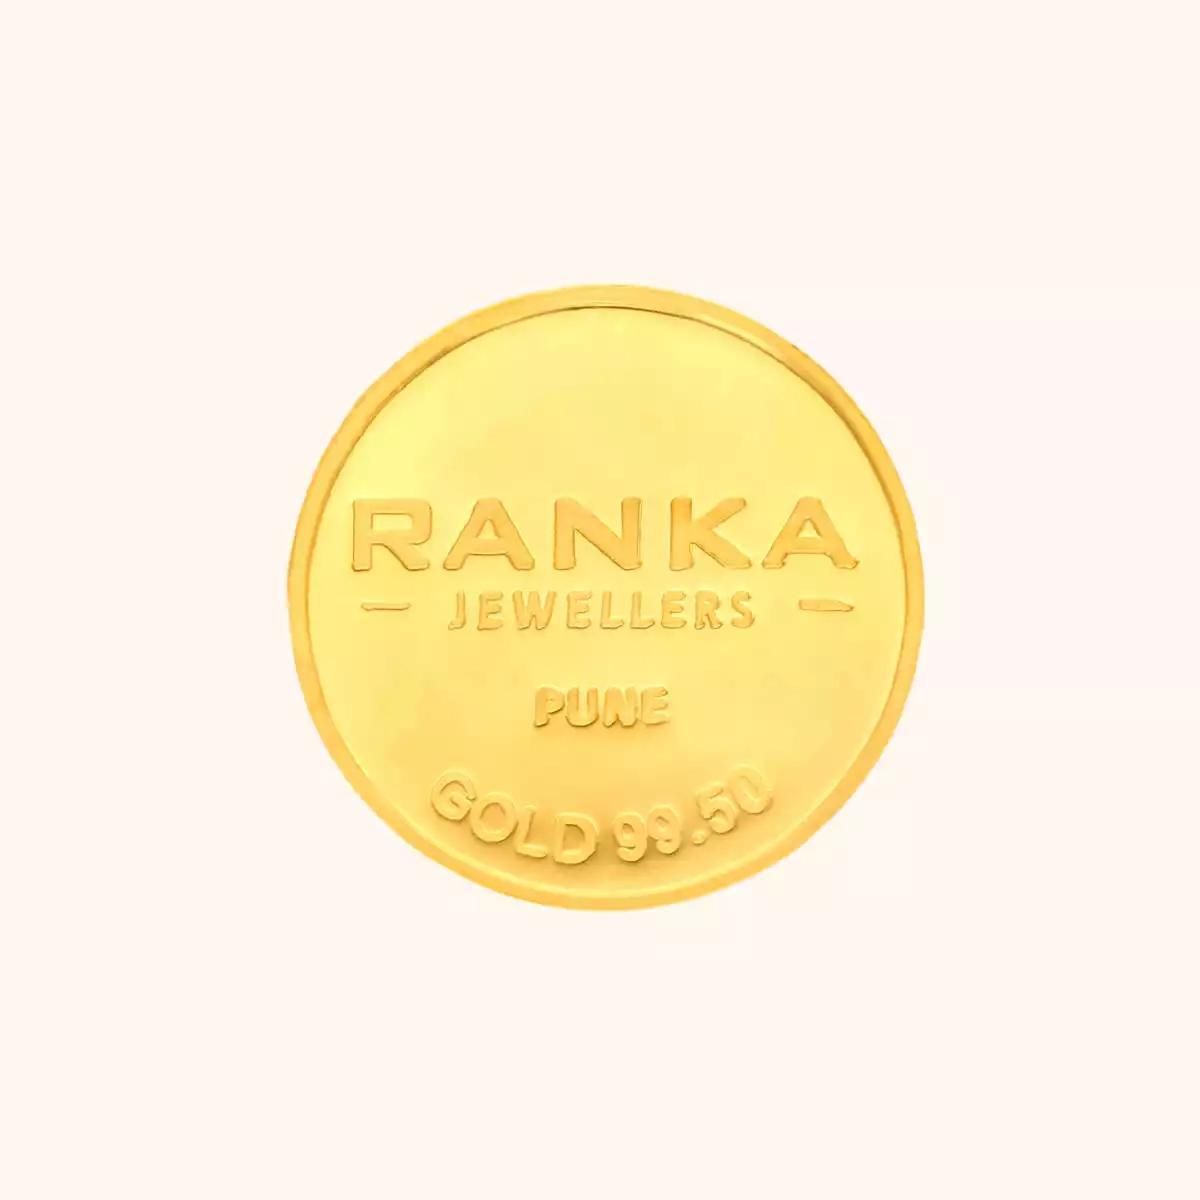 8 Gm Rose 24KT Gold Coin